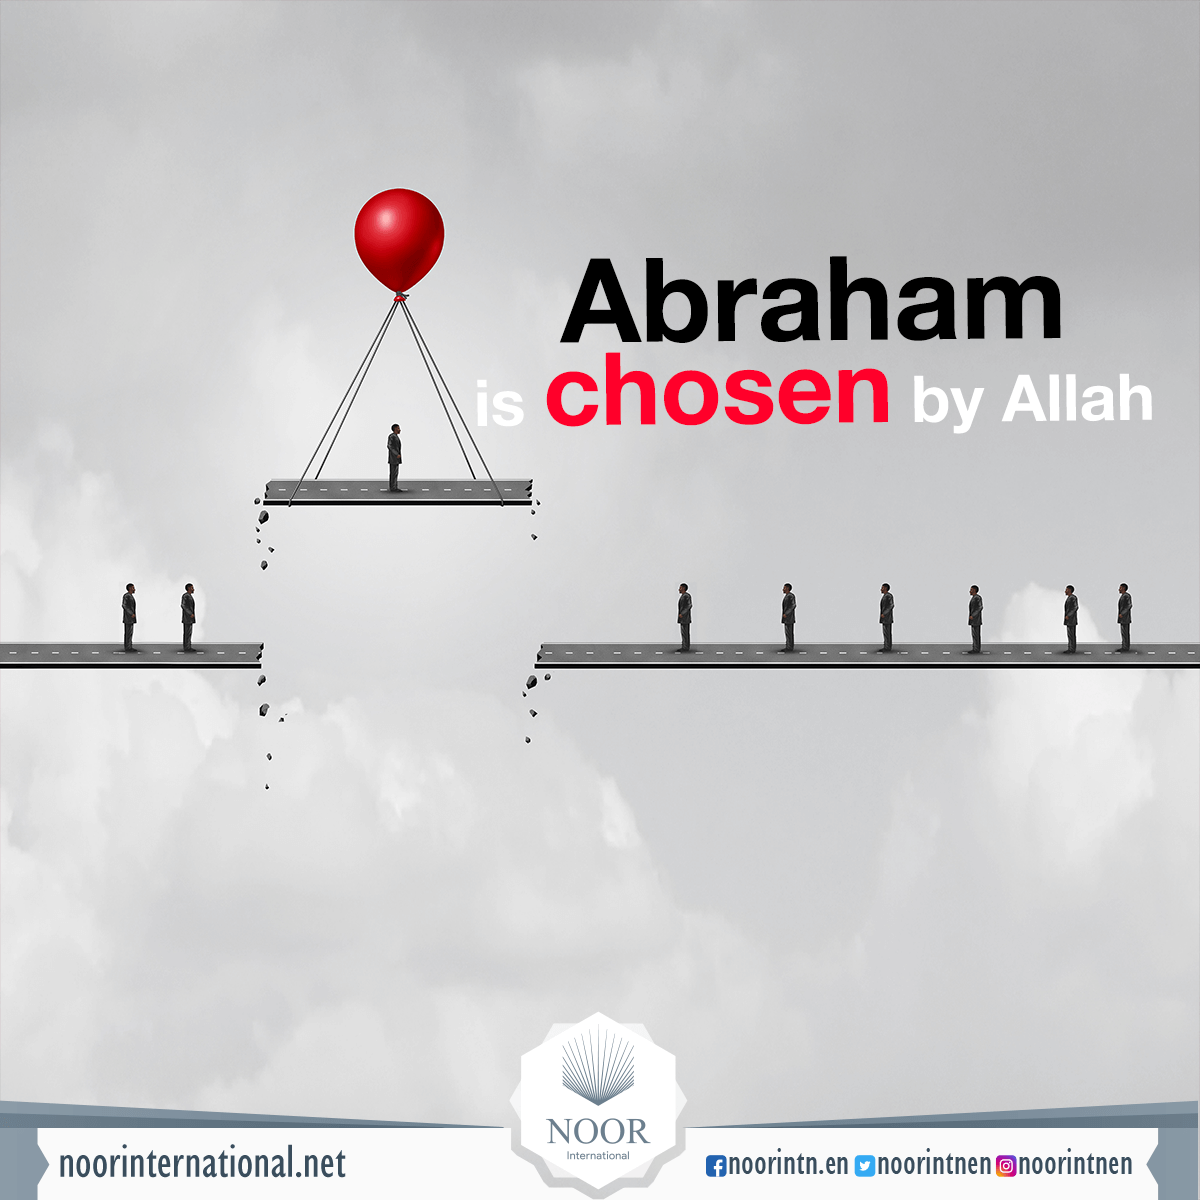 Abraham is chosen by Allah